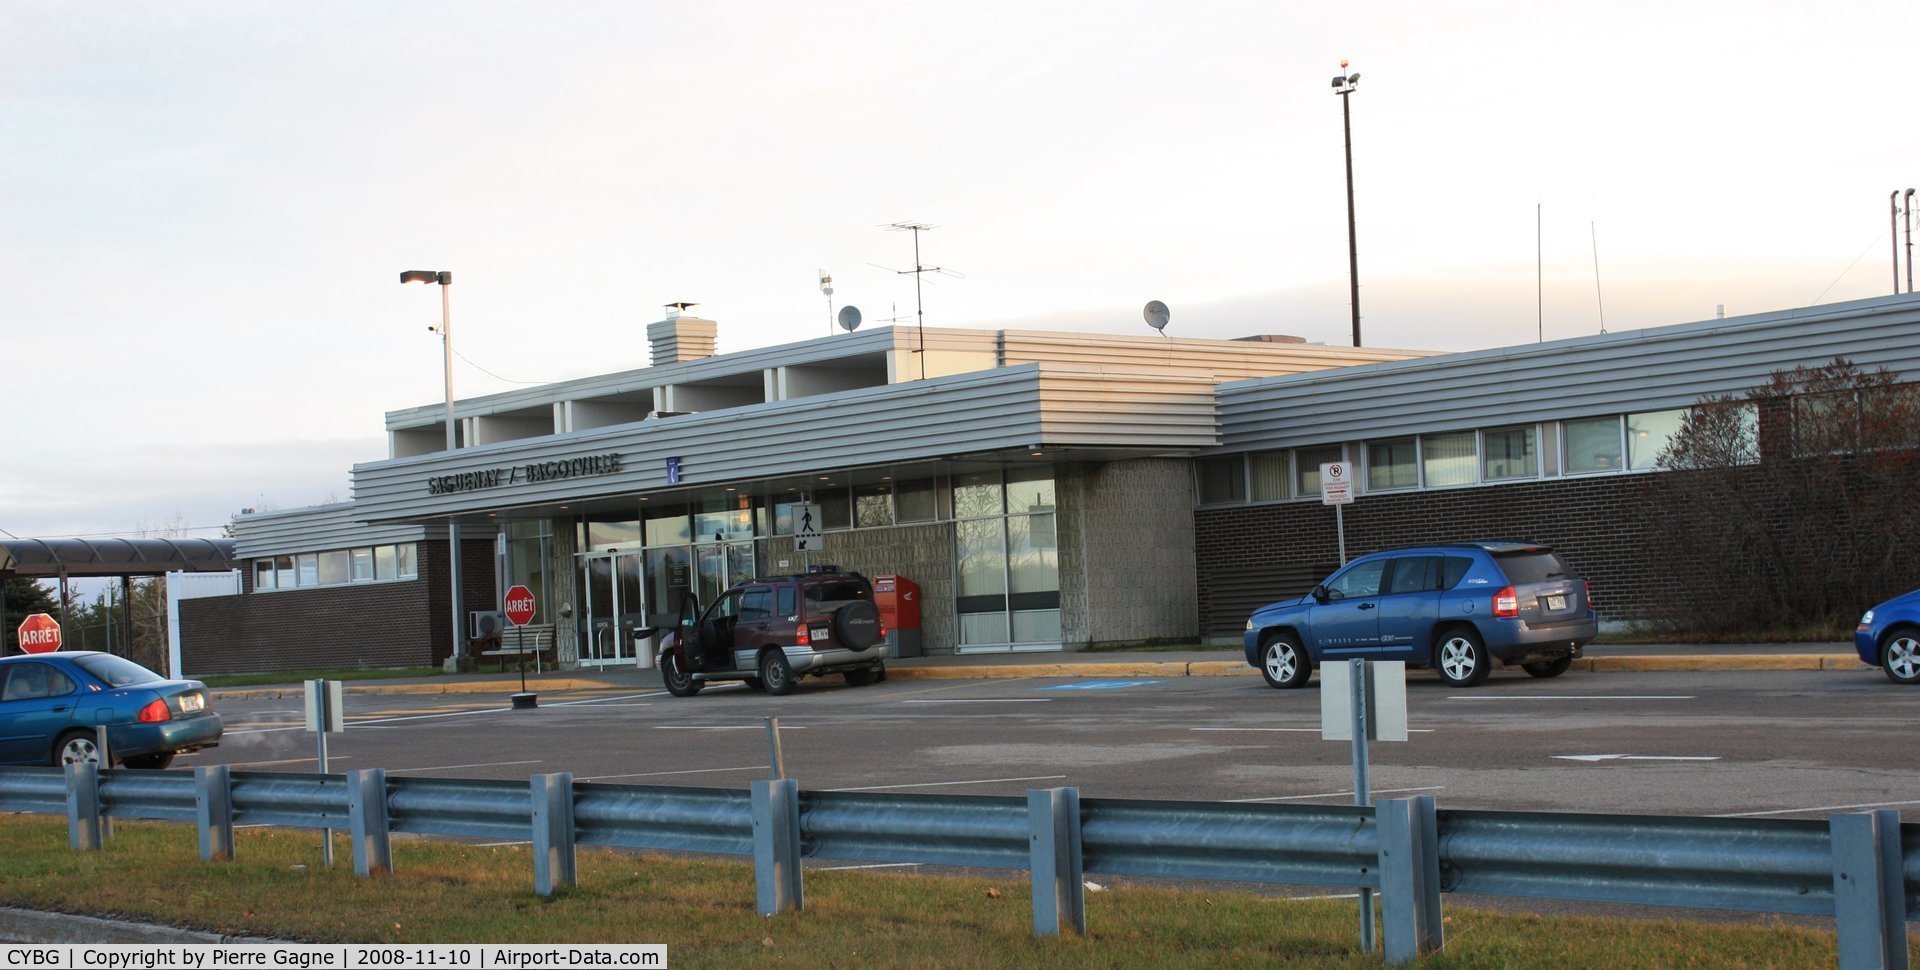 CFB Bagotville (Bagotville Airport), Bagotville, Quebec Canada (CYBG) - BFC Bagotville, civil terminal